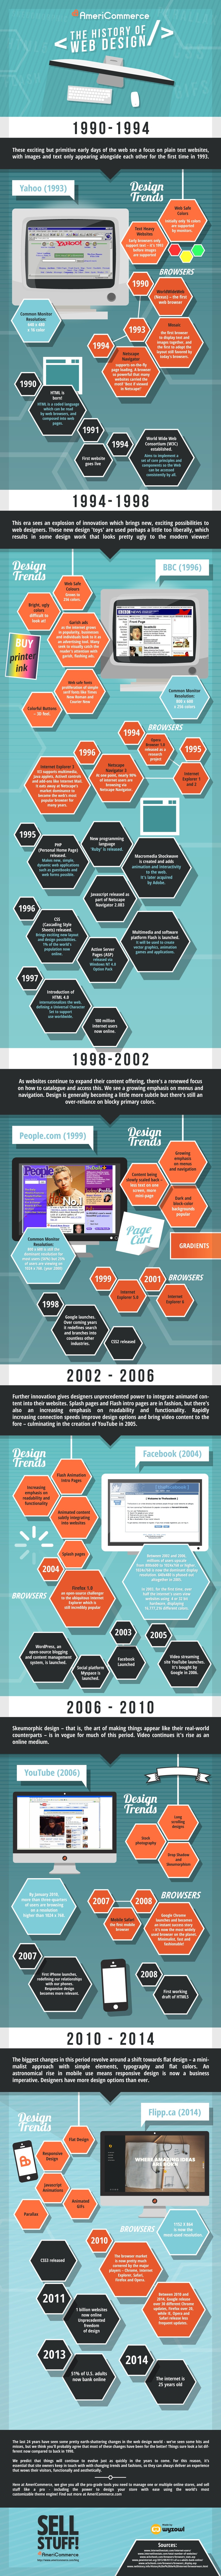 history of web design